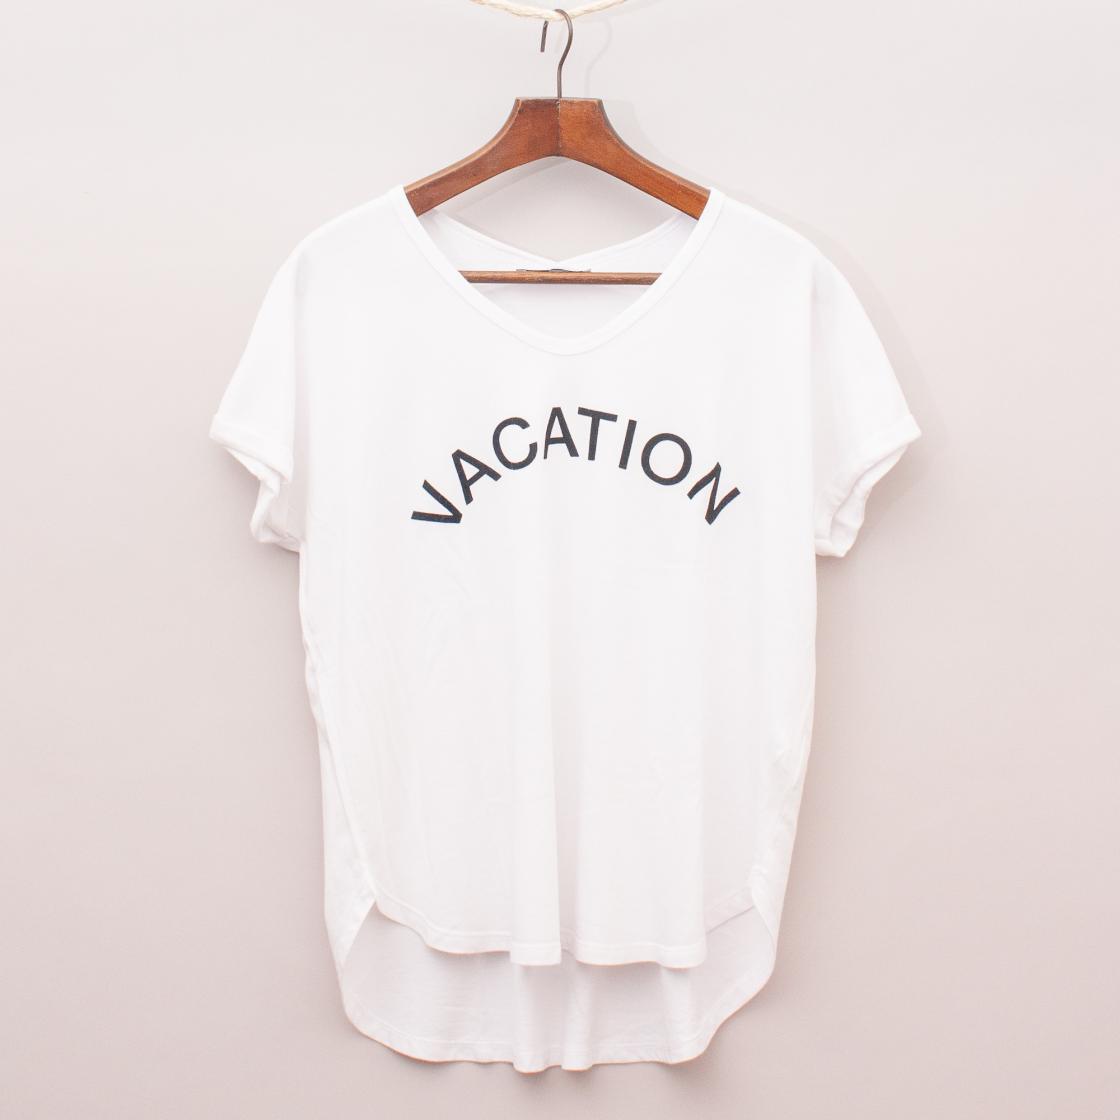 Decjuba 'Vacation' T-Shirt